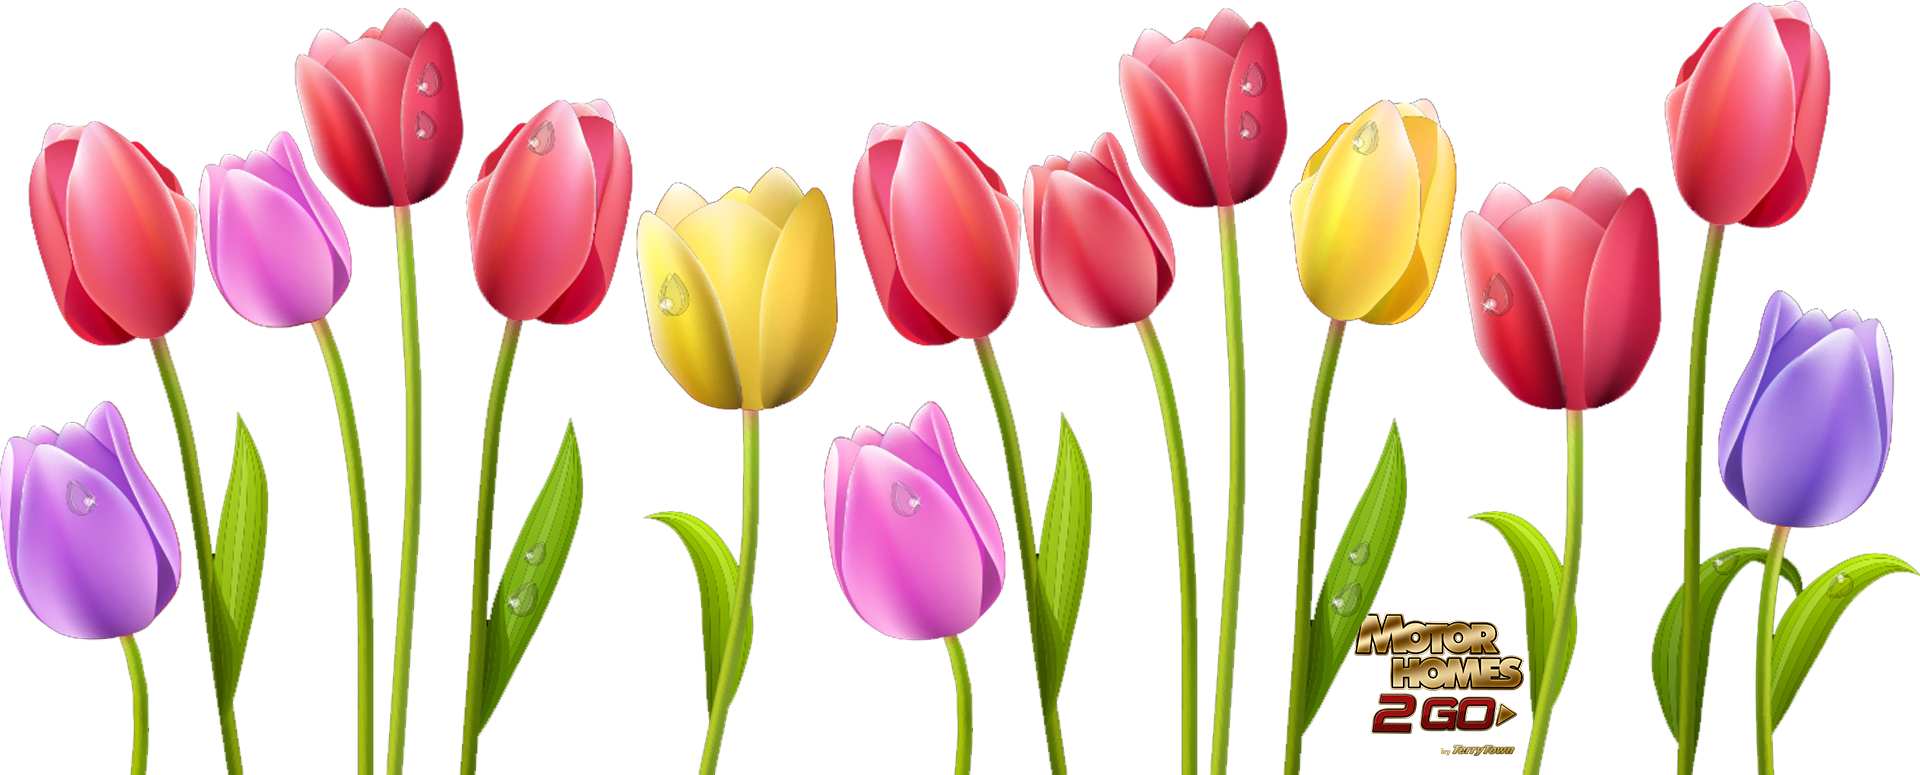 Clipart free tulip, Picture #526738 clipart free tulip.